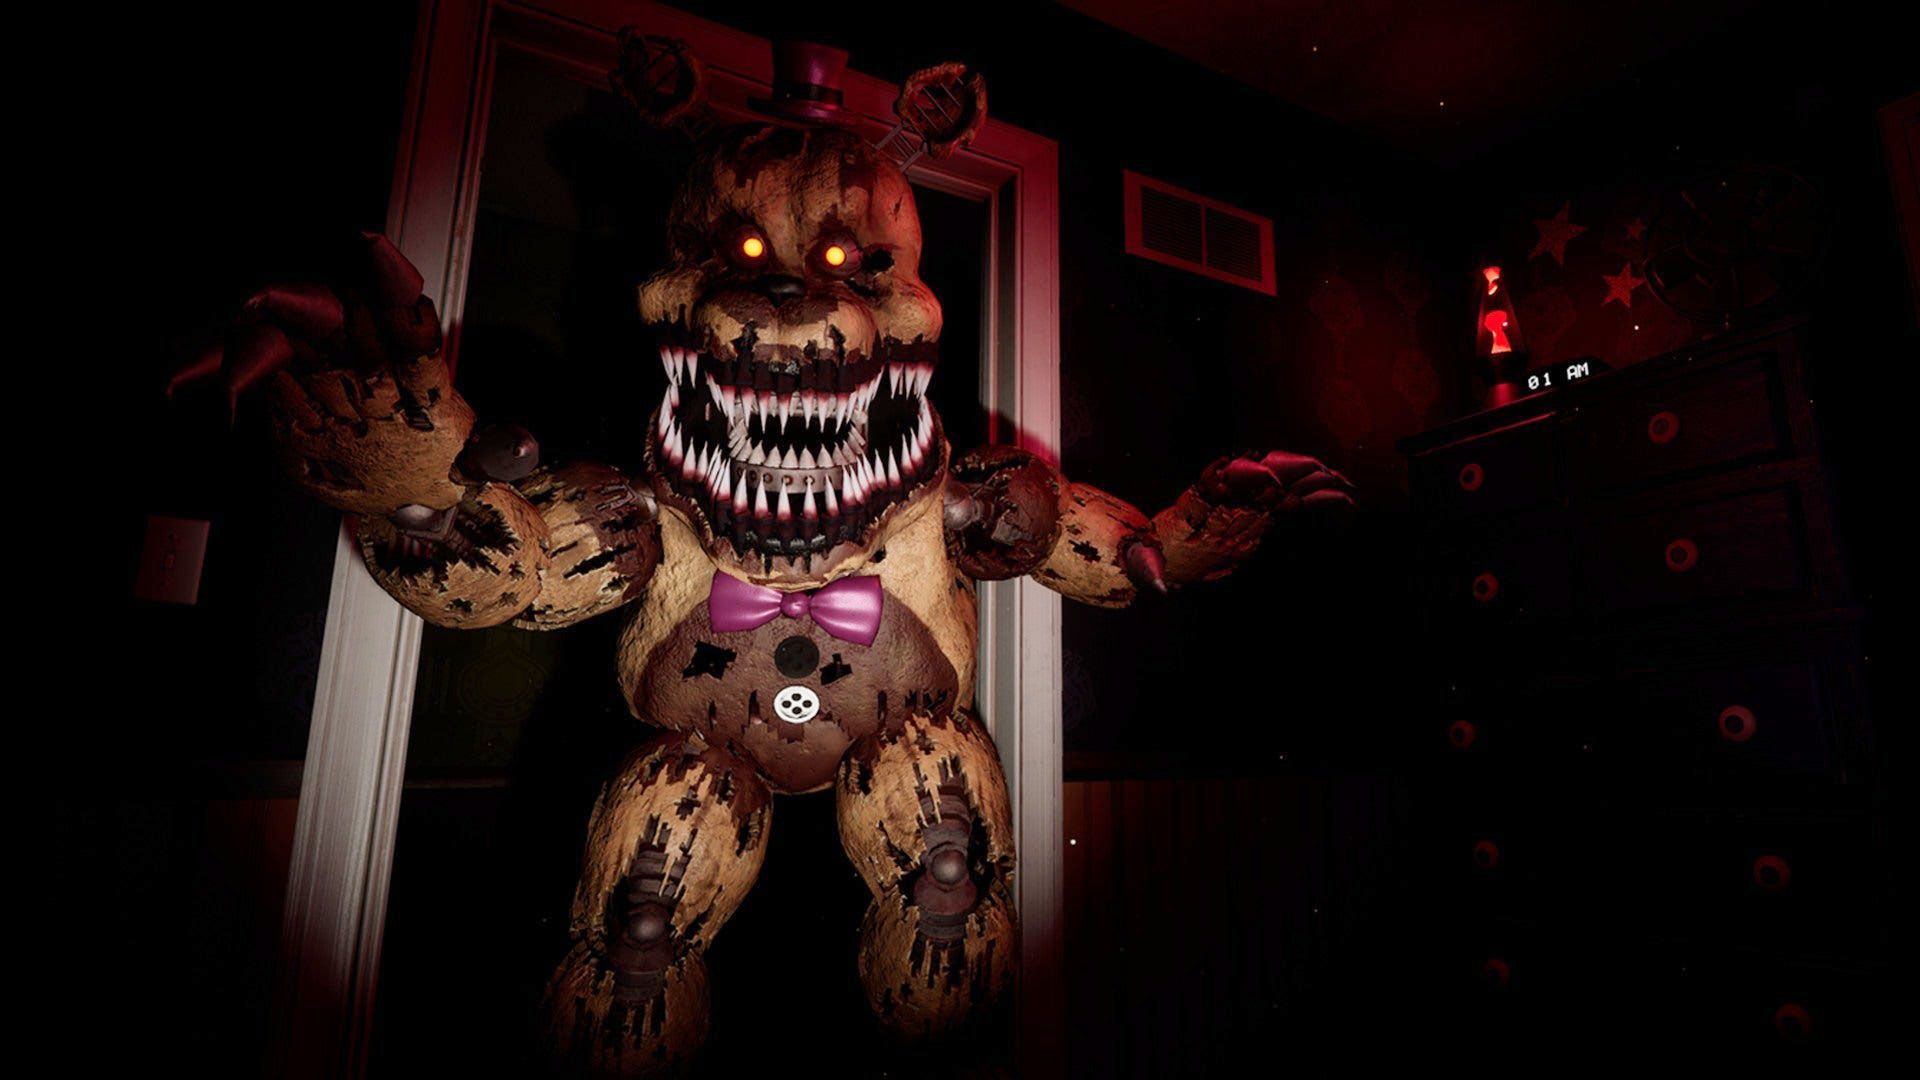 Fortnite at Freddy's: Season 2